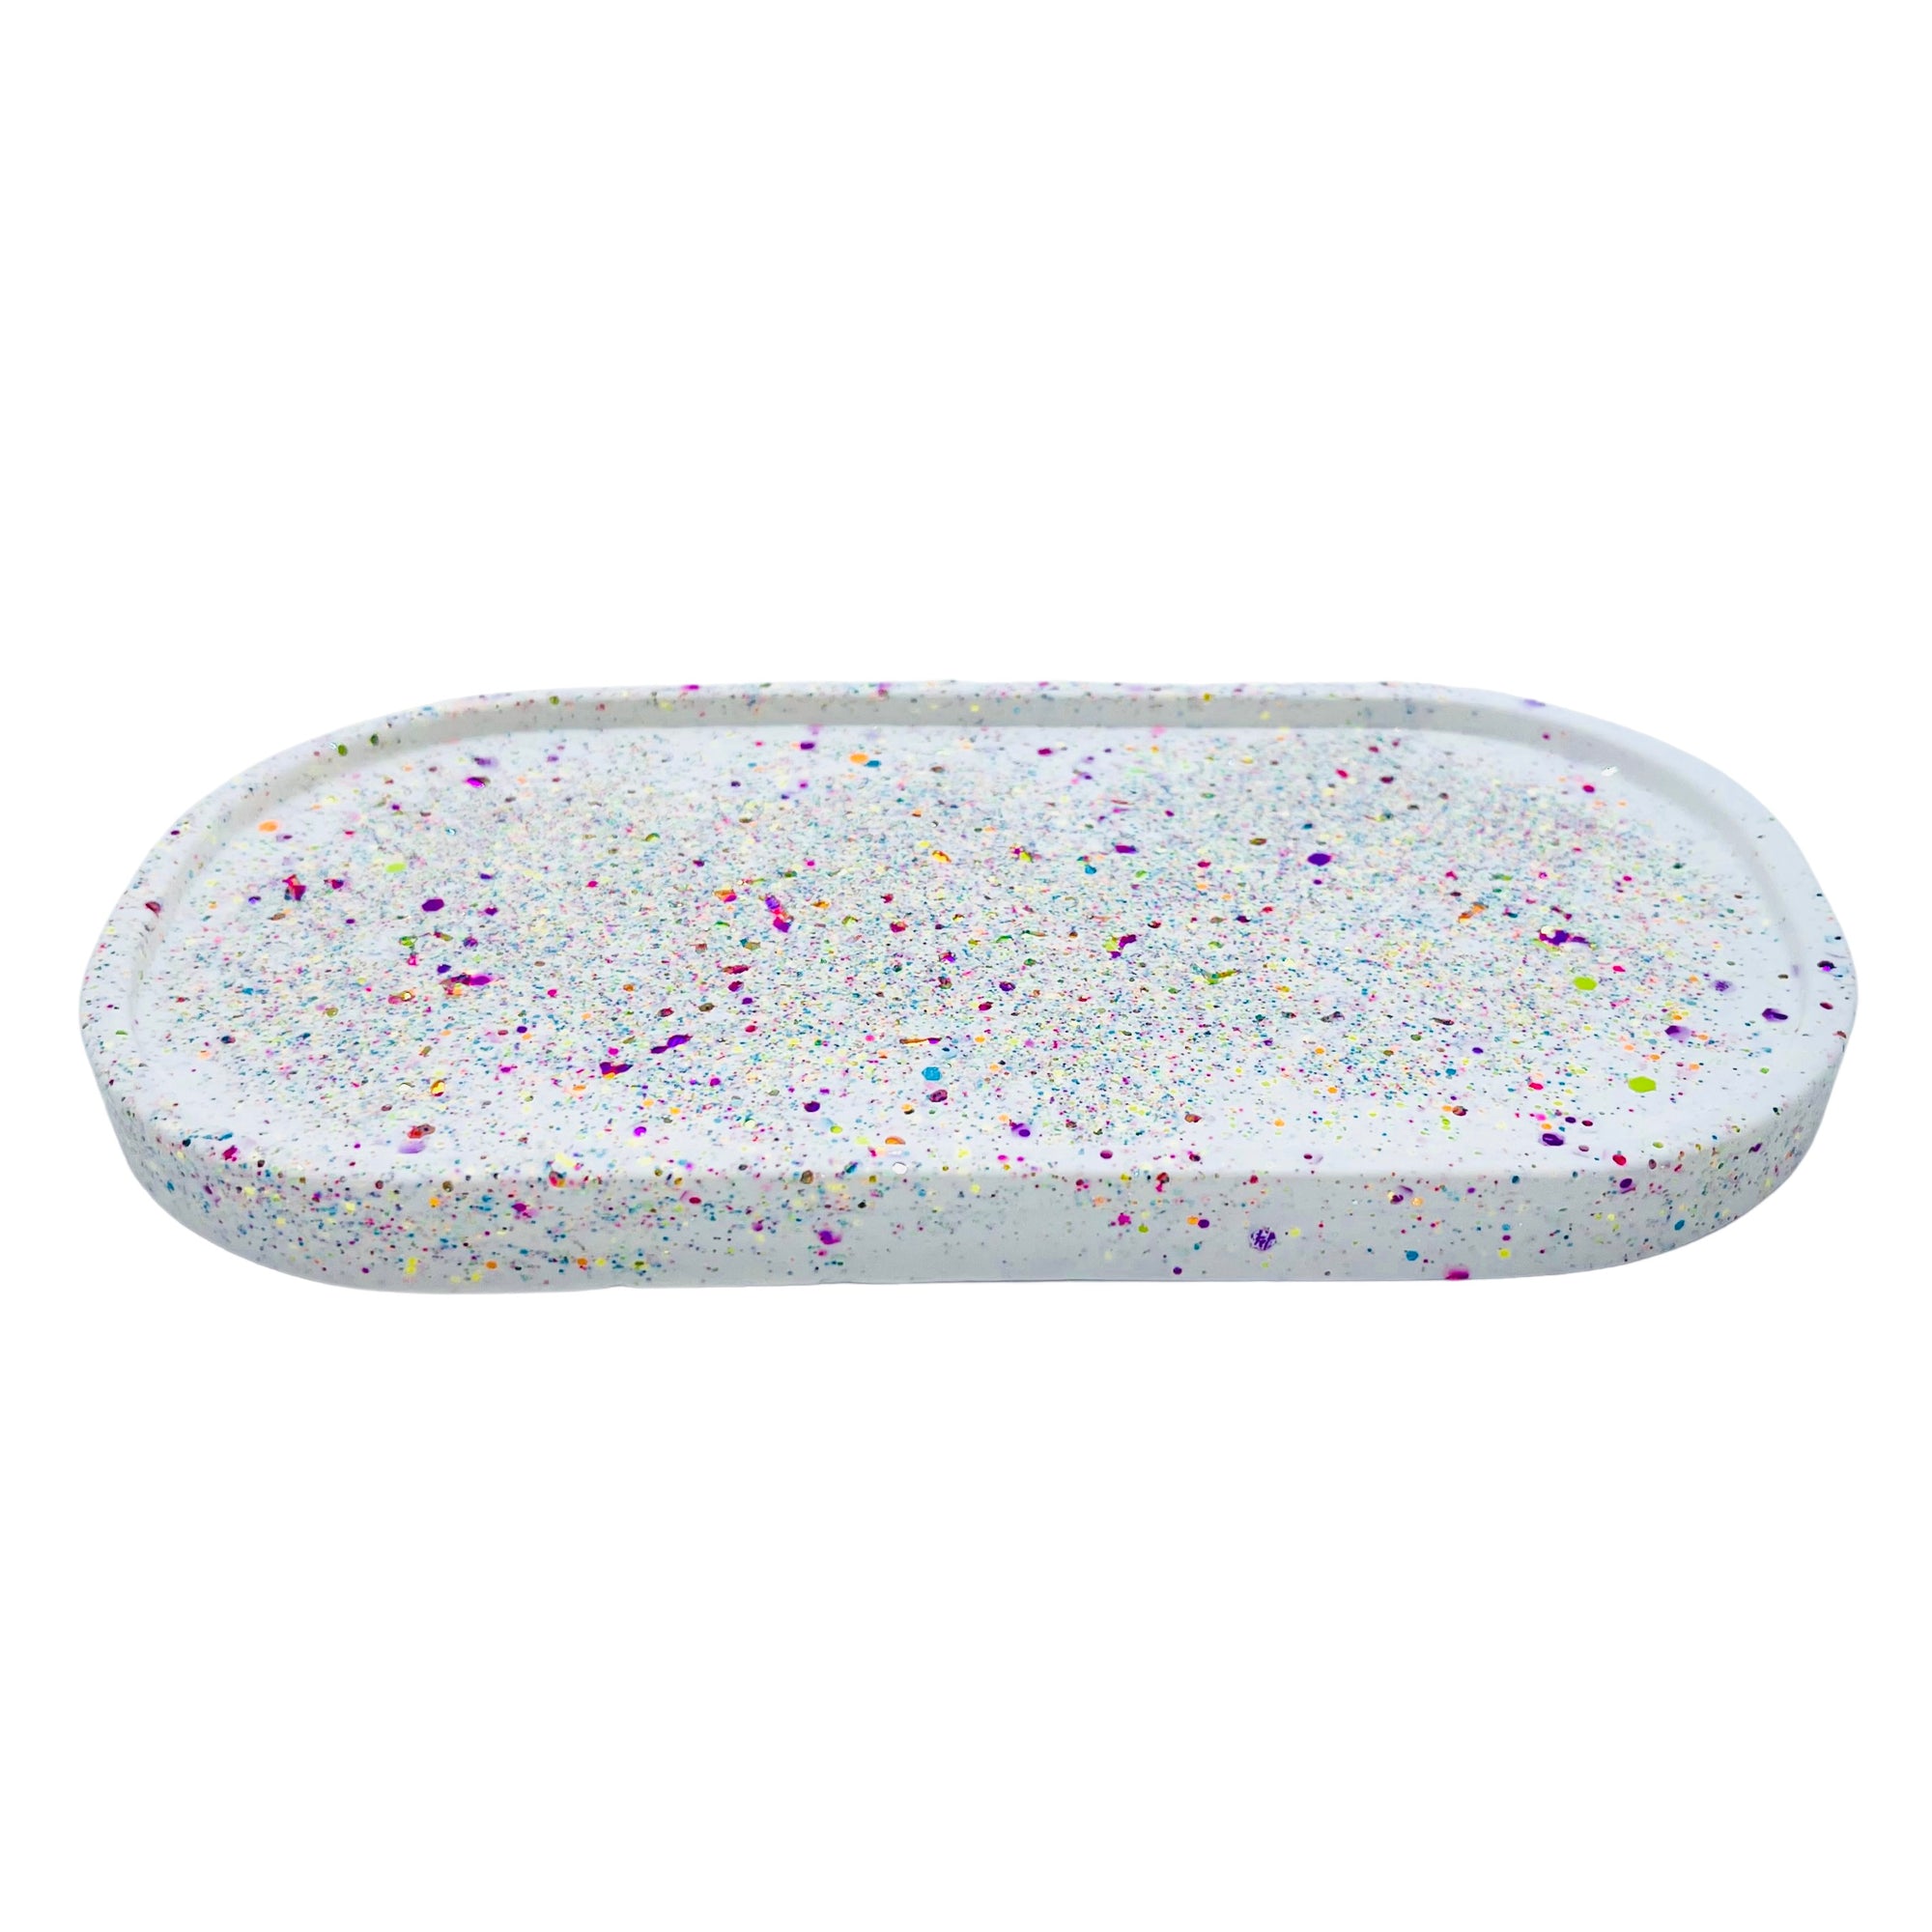 A white oval Jesmonite trinket tray sprinkled with rainbow glitter.